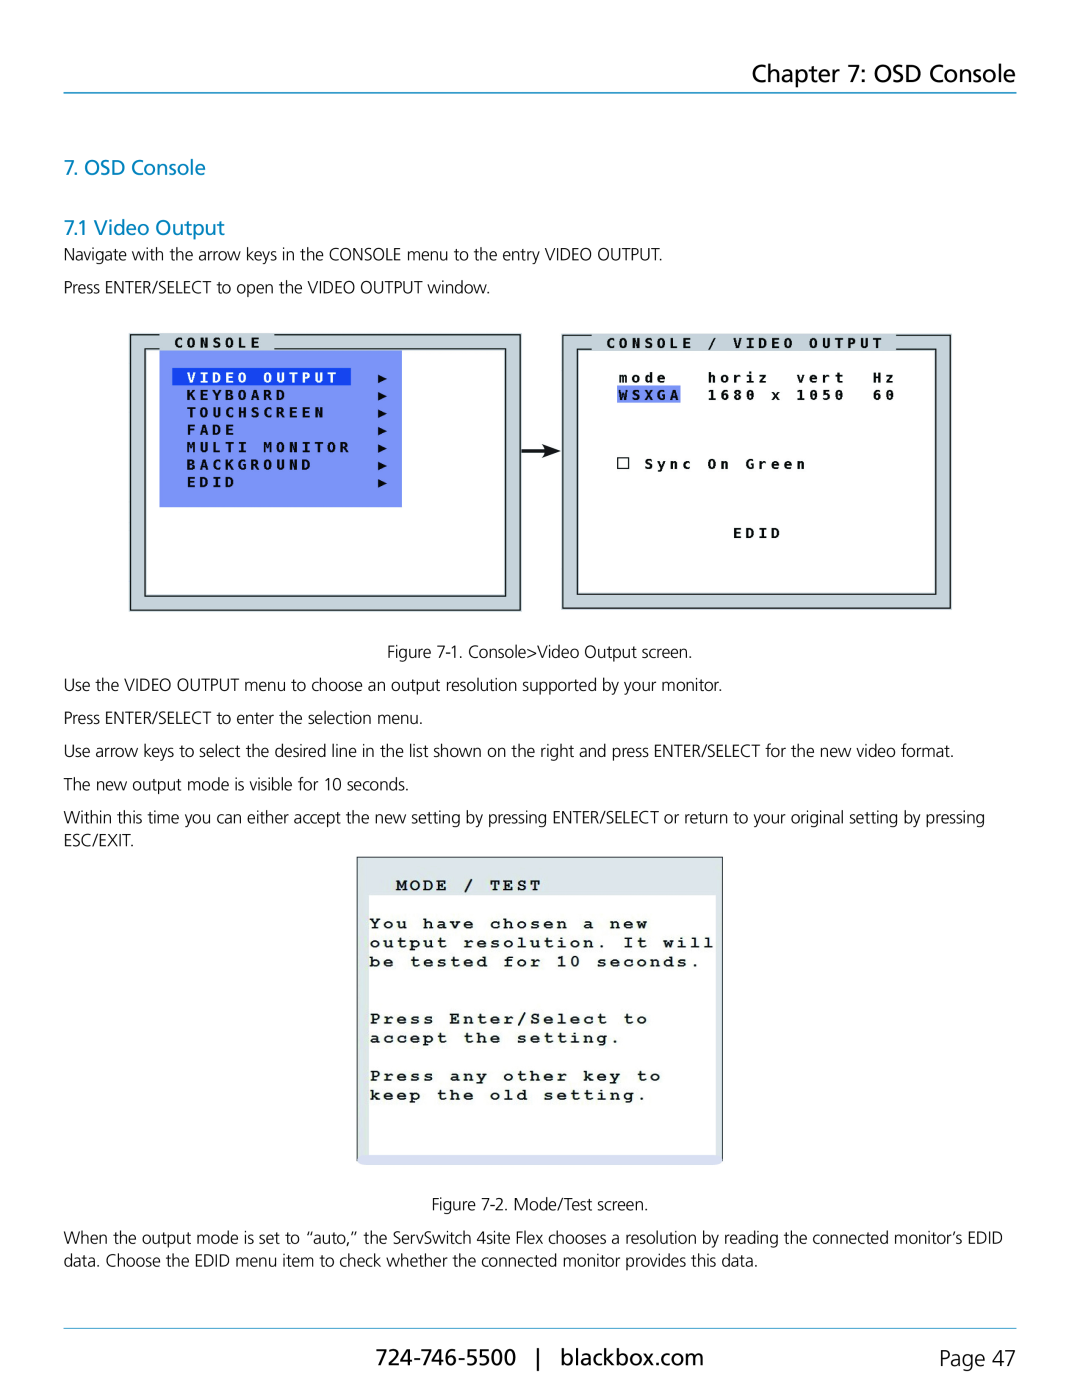 Black Box servswitch 4site flex, KVP40004A manual OSD Console 7.1 Video Output, Page 